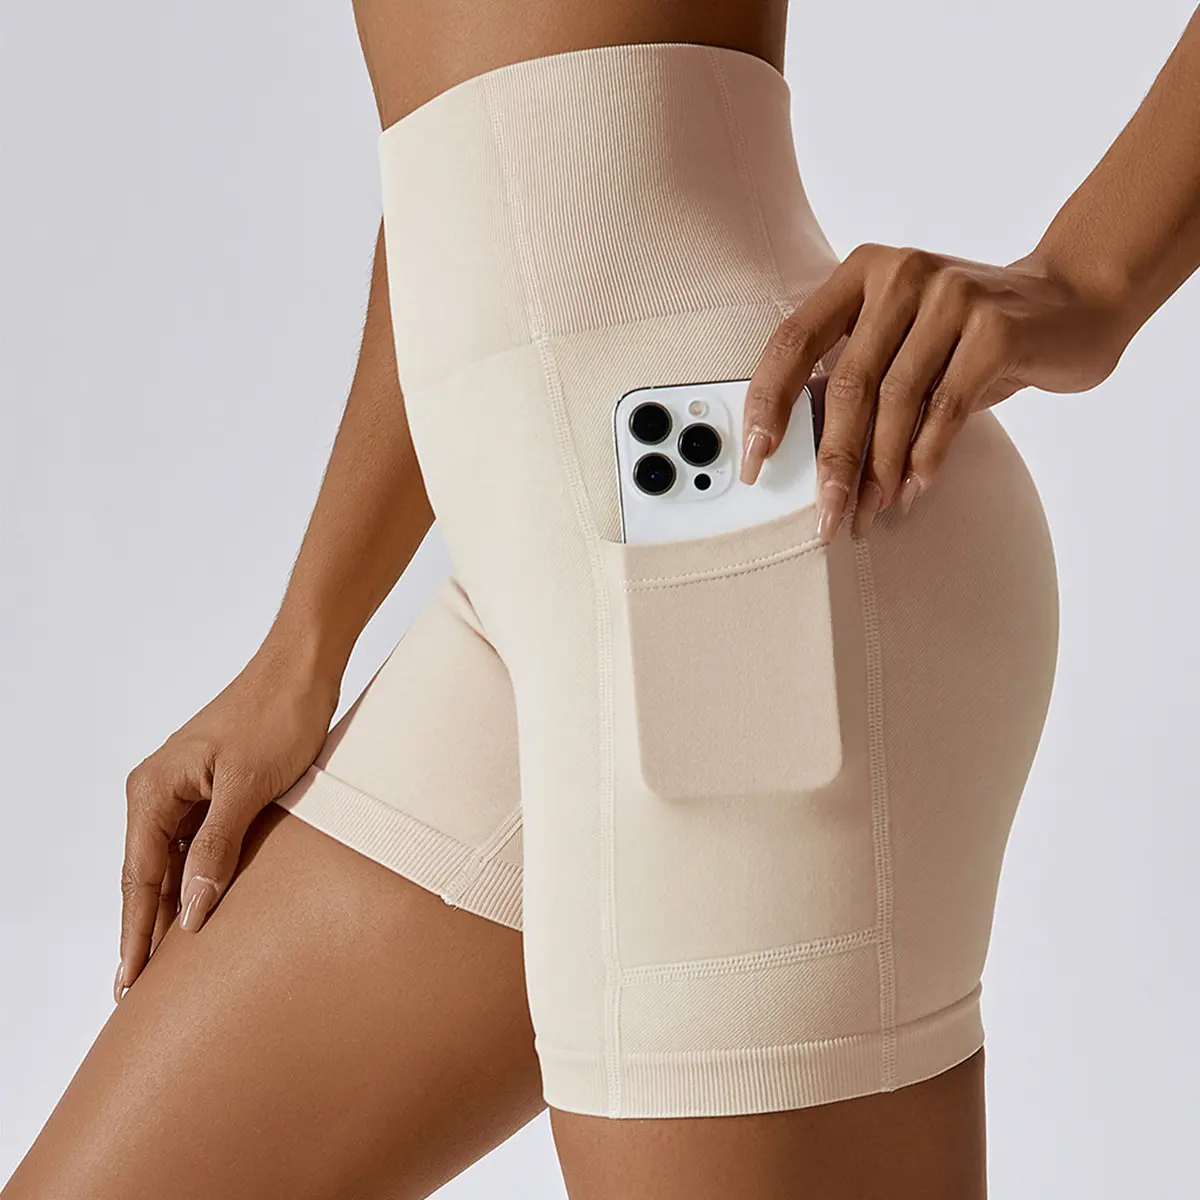 GC S/M/L/XL scrunch butt leggings con leggins tascabili para mujer push up leggings senza cuciture leggings a vita alta con tasche